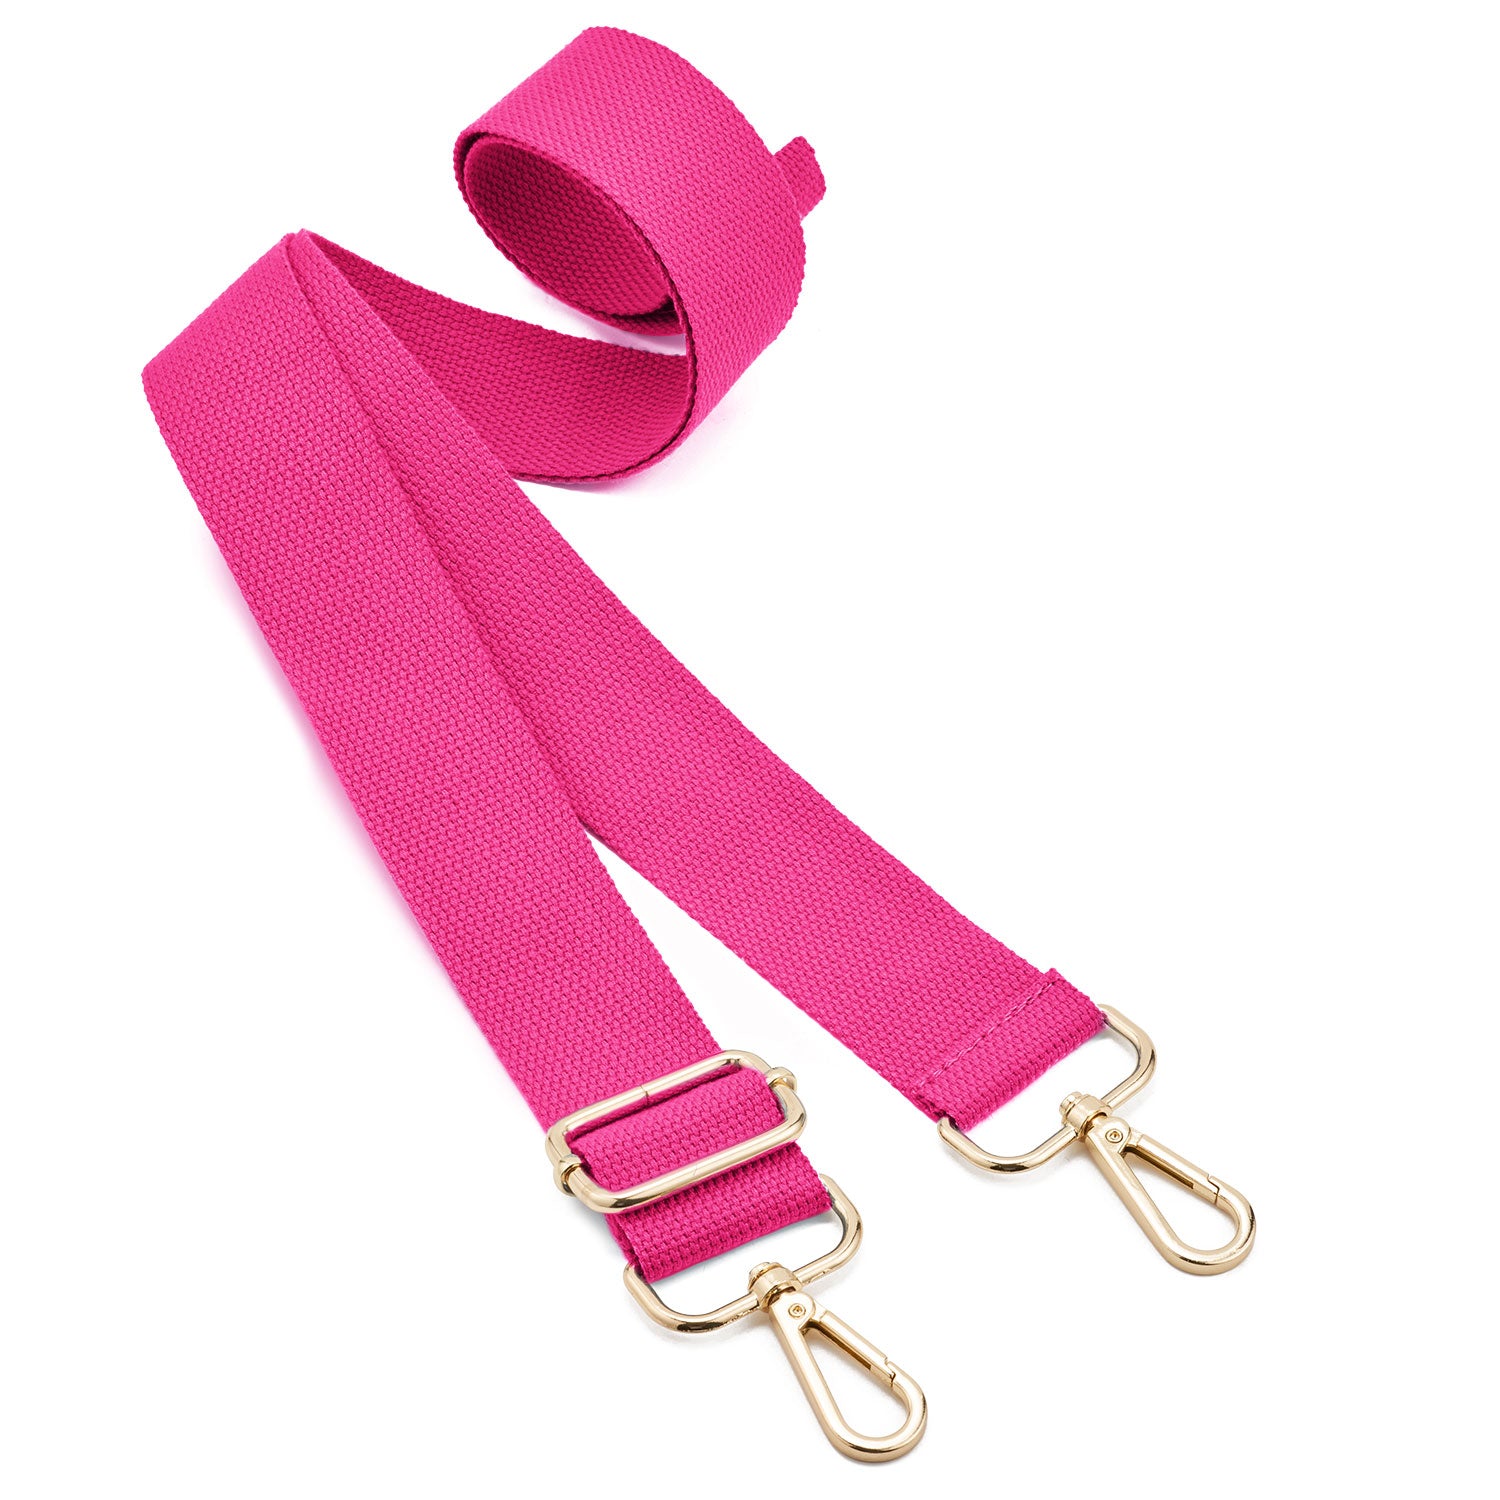 Riapawel Canvas Bag Strap Replacement Adjustable Shoulder Strap for Messenger, Laptop, Camera, Travel Bags, Men's, Size: One size, Pink